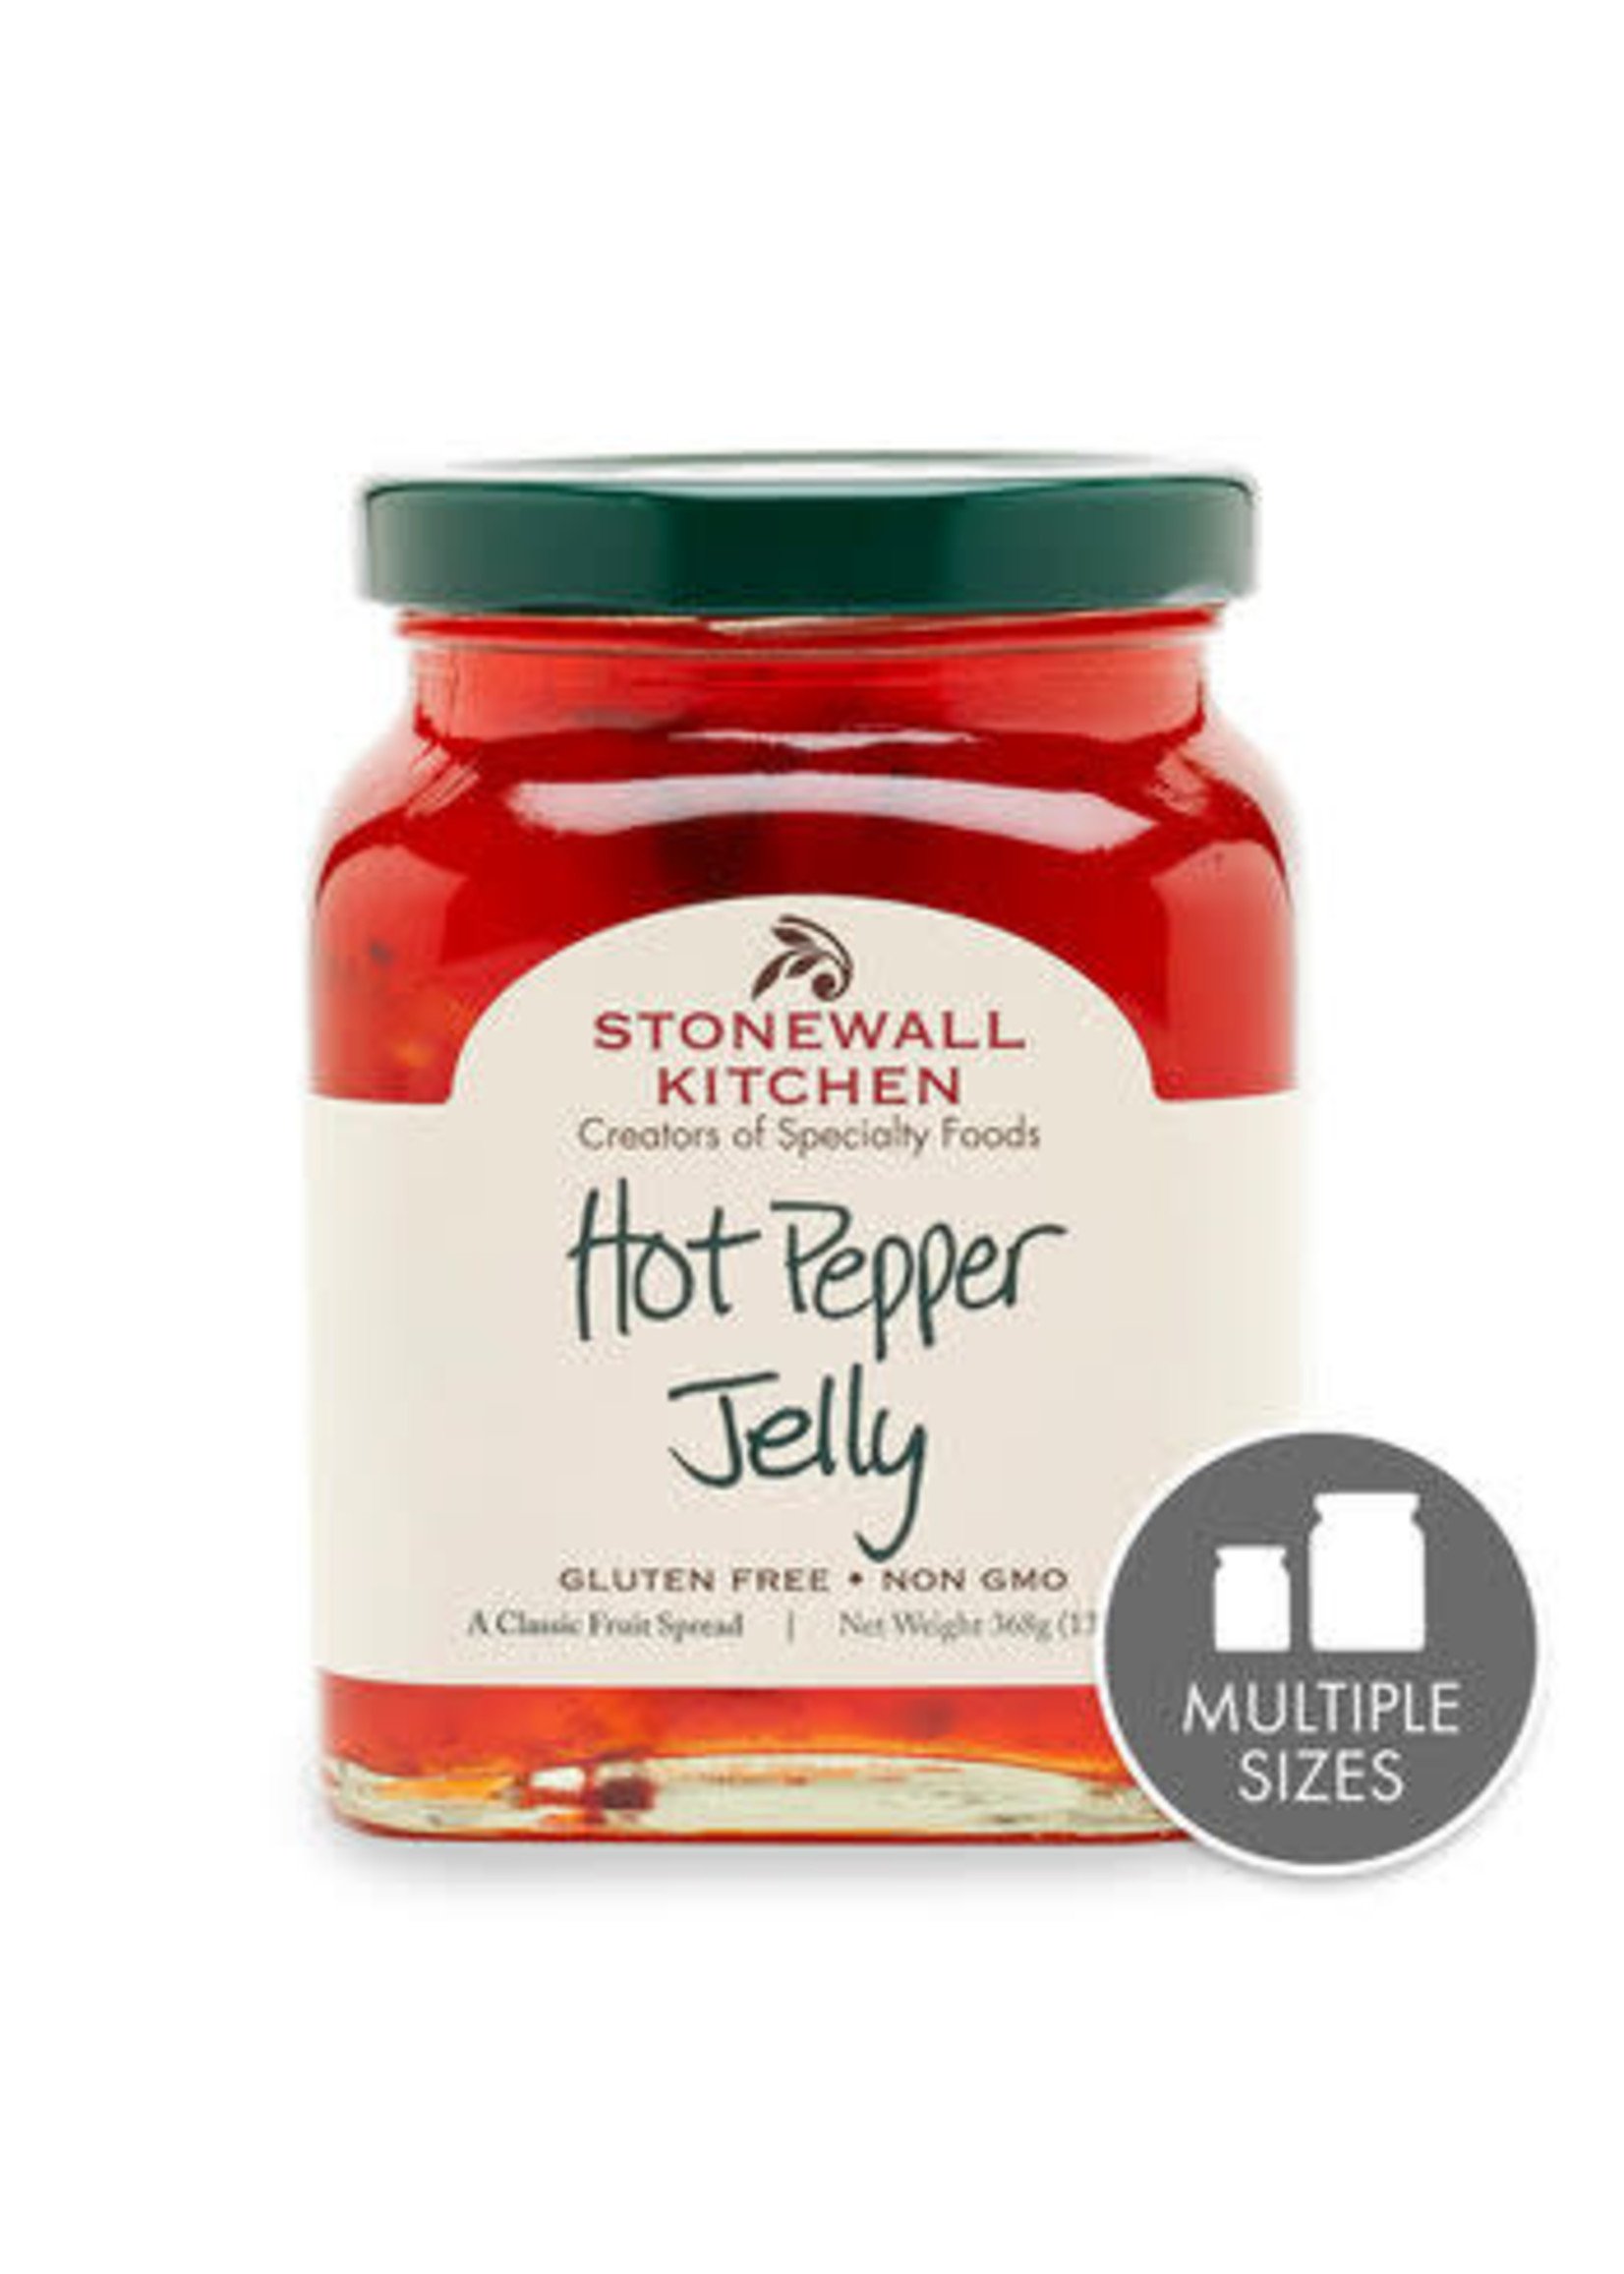 Stonewall Kitchen Hot Pepper Jelly